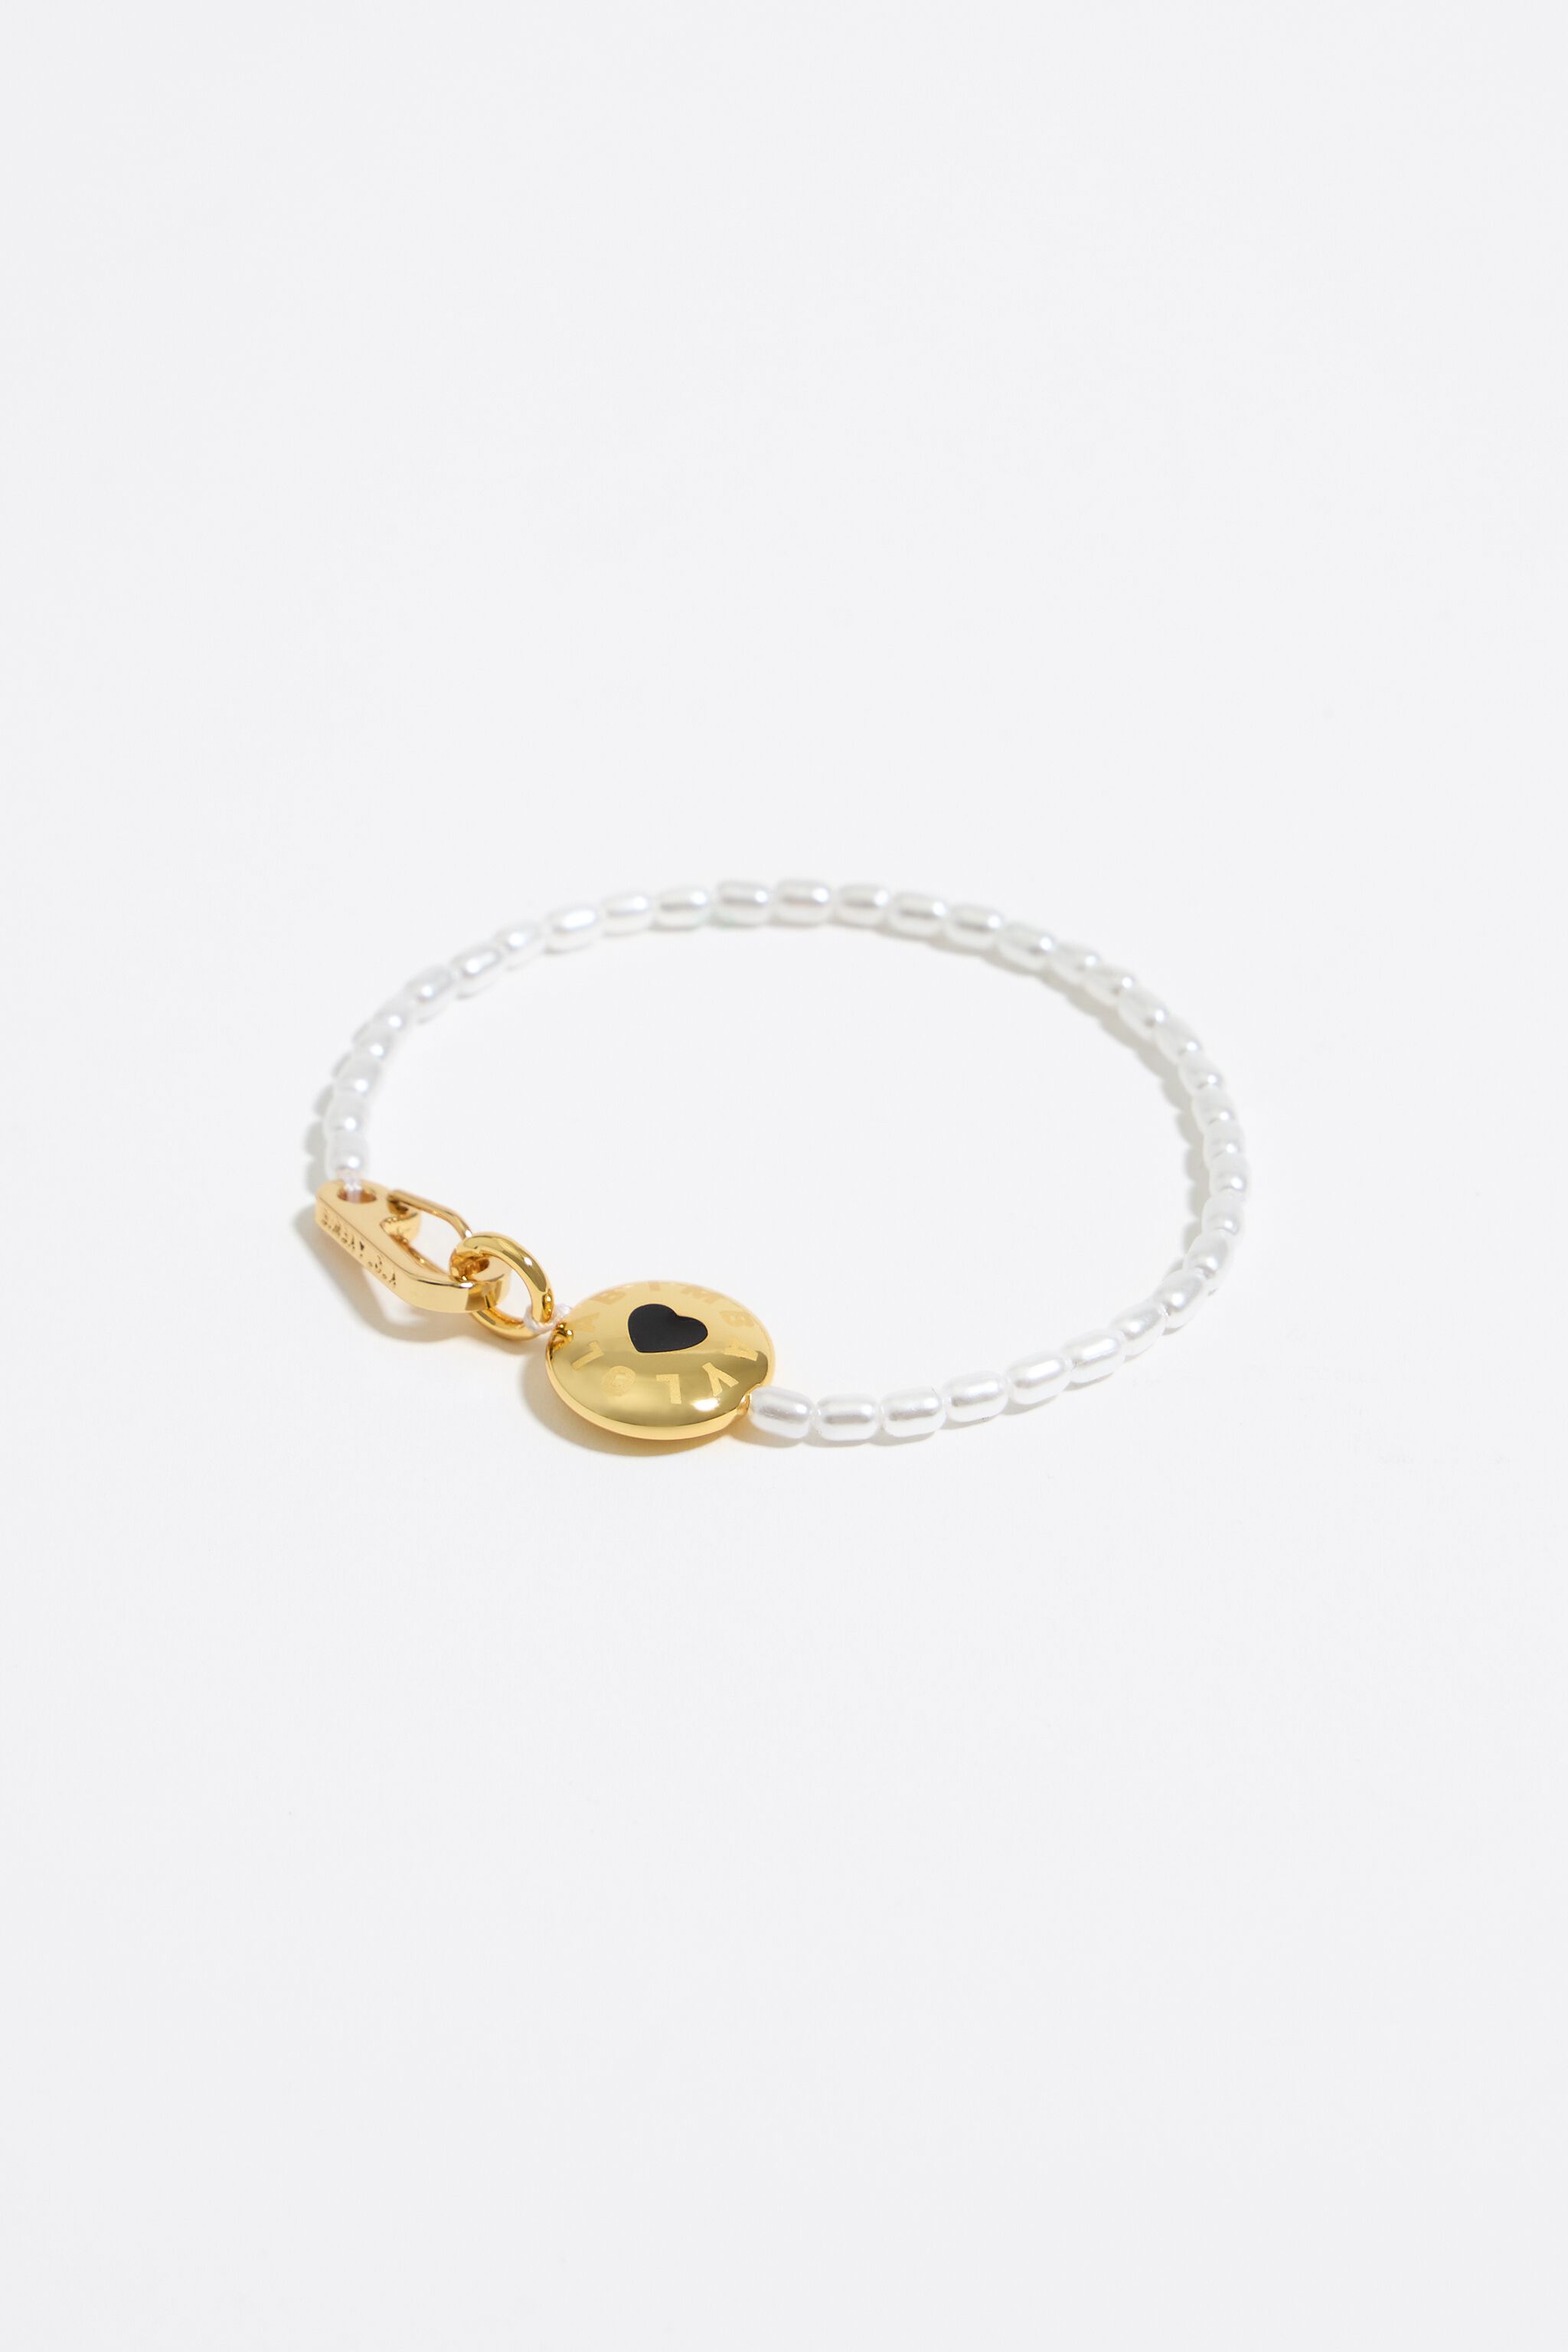 Senco Gold 18k (750) Yellow Gold Bracelet for Girls : Amazon.in: Fashion